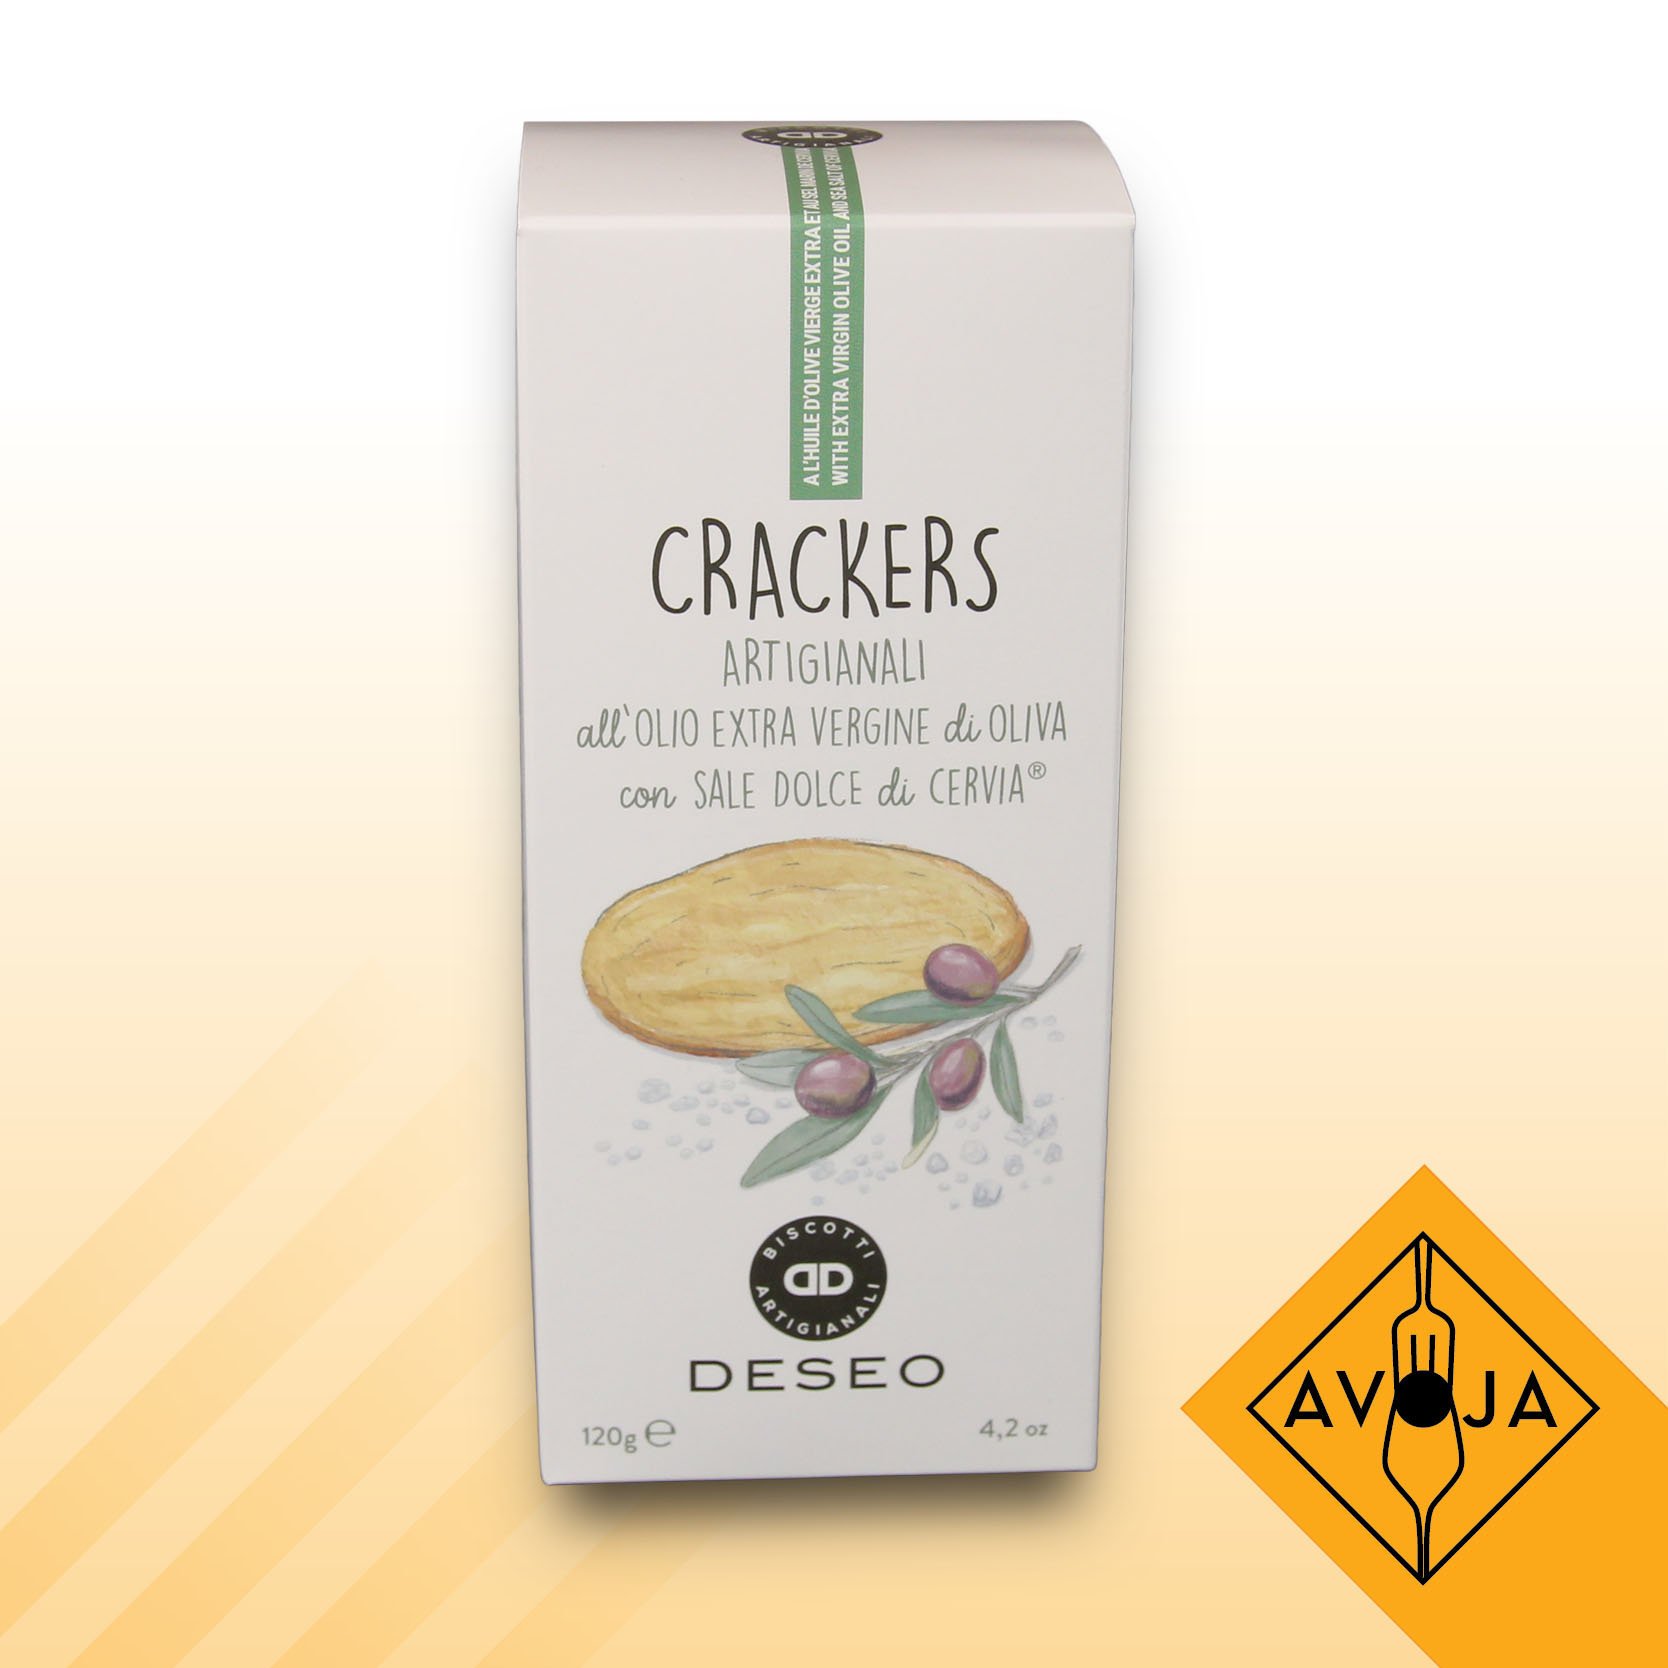 Crackers artigianali - Deseo